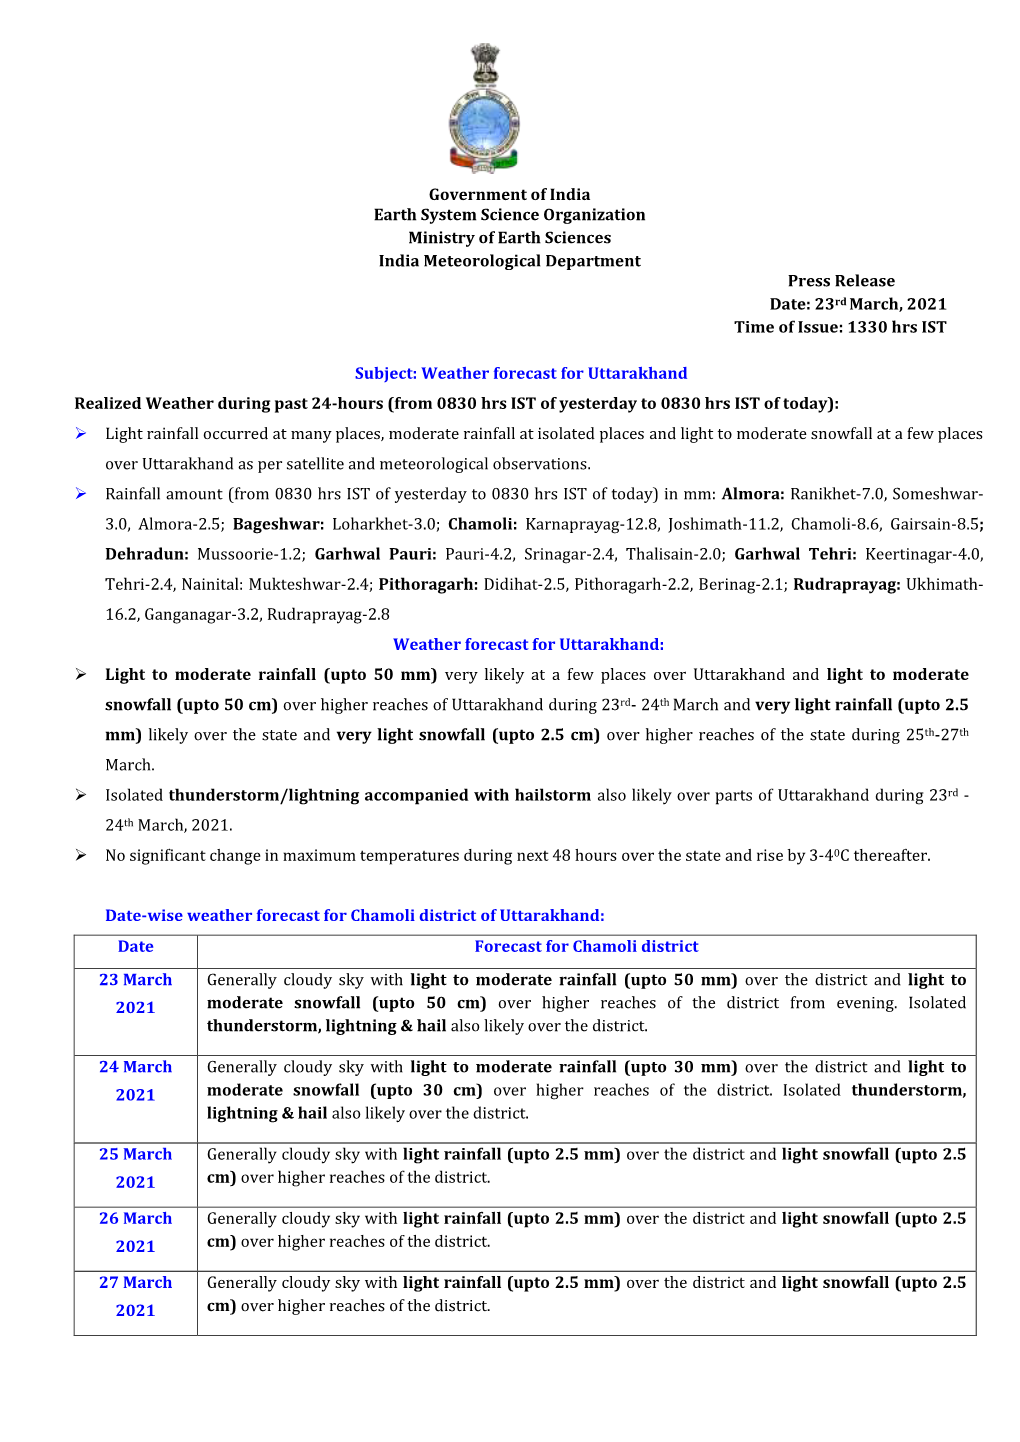 Subject: Weather Forecast for Uttarakhand